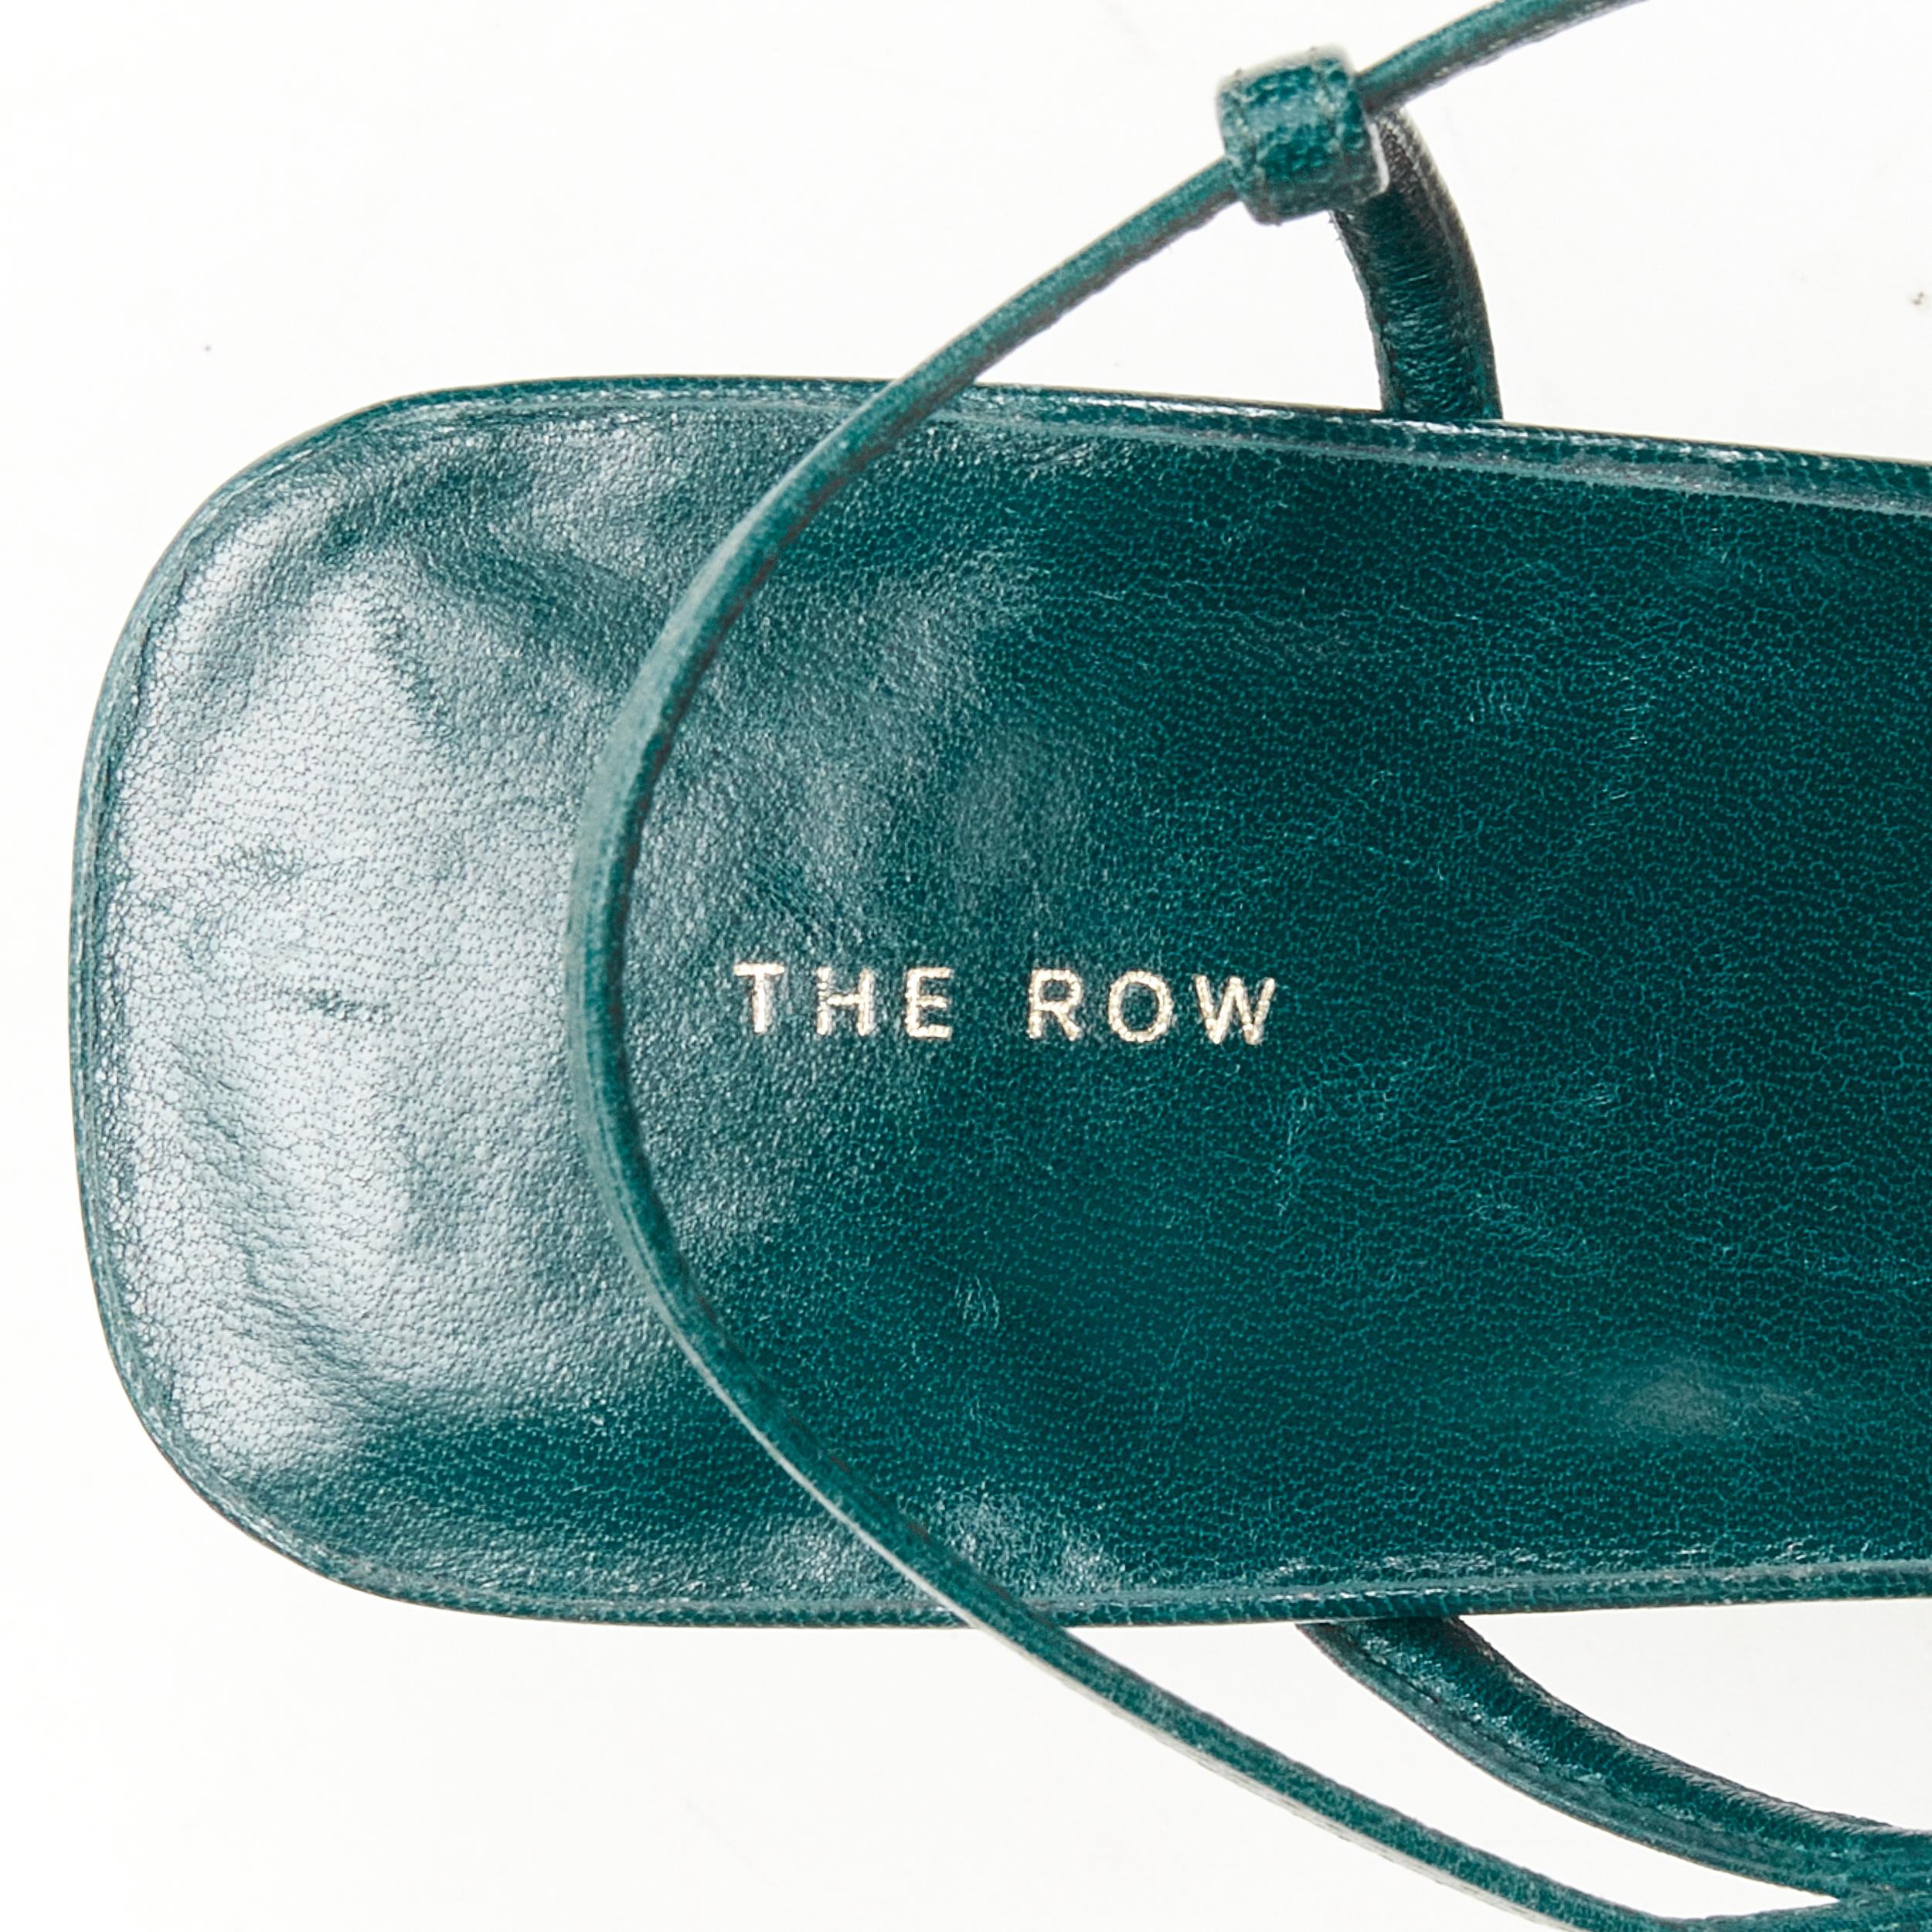 new THE ROW Bare 65 dark forest green minimalist strappy heel sandal EU39.5 1